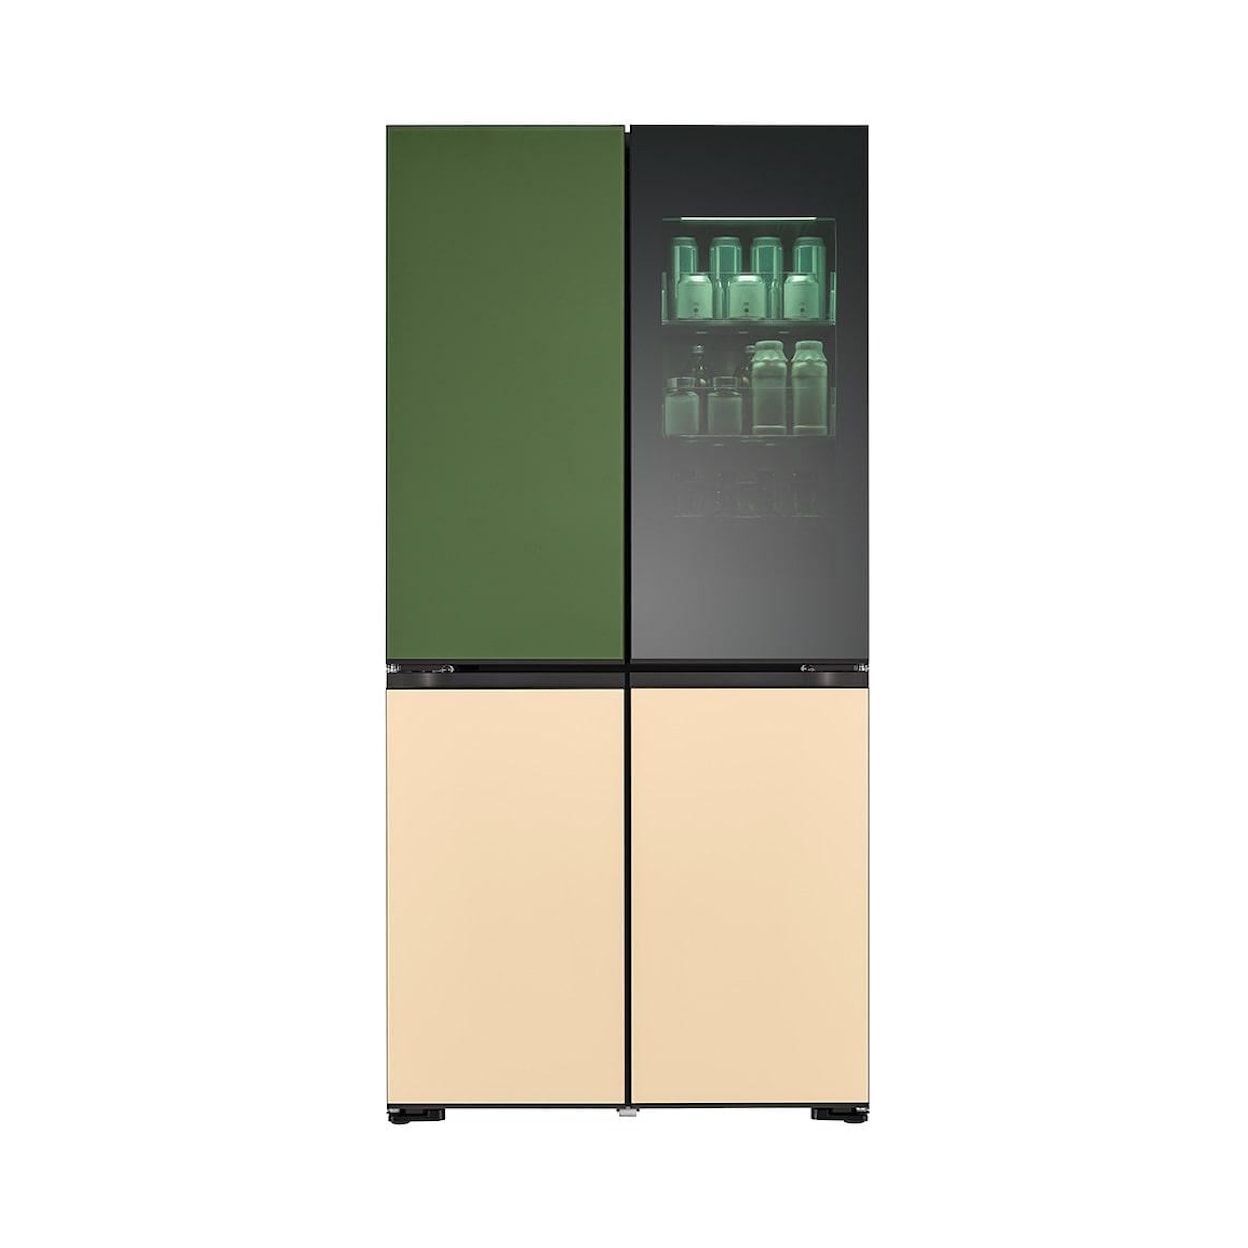 LG Appliances Refrigerators French Door Freestanding Refrigerator